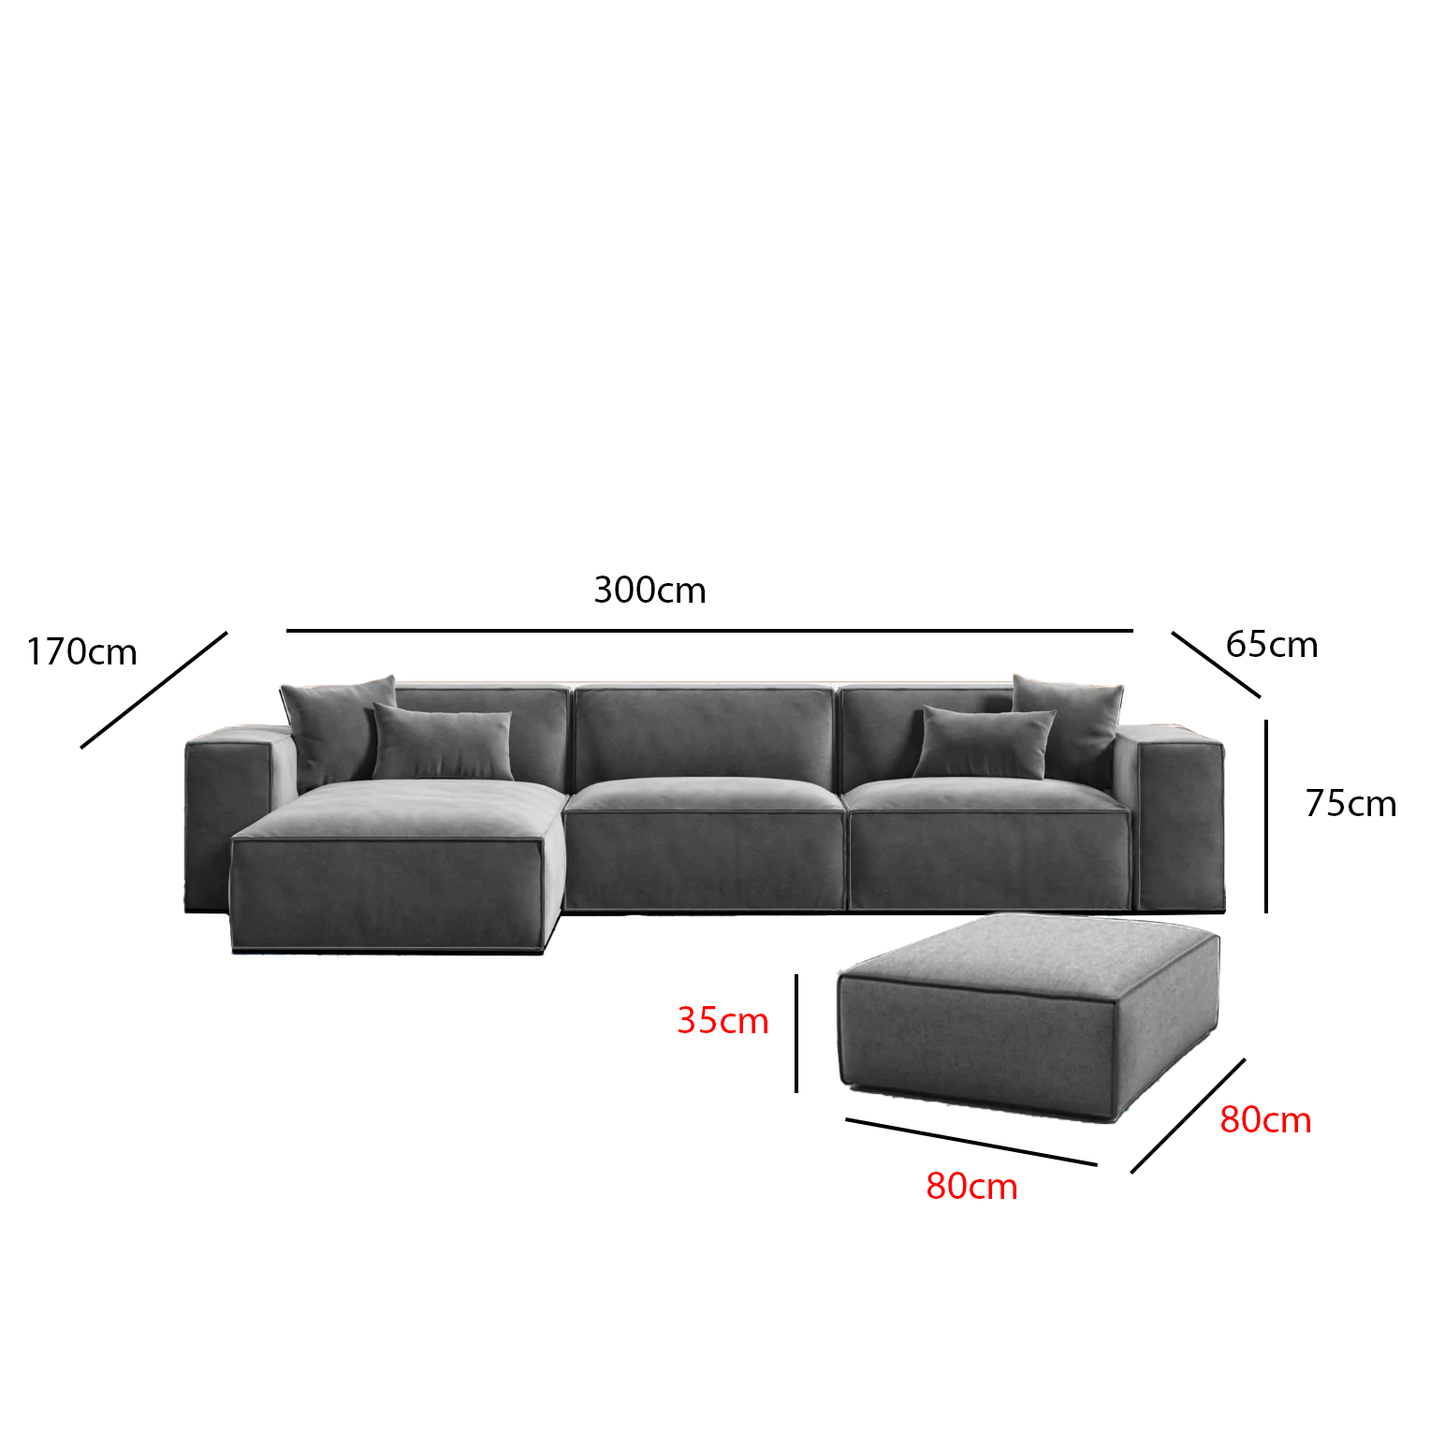 sofa Corner with Pouf 300×170cm - Multiple Colors - KM300